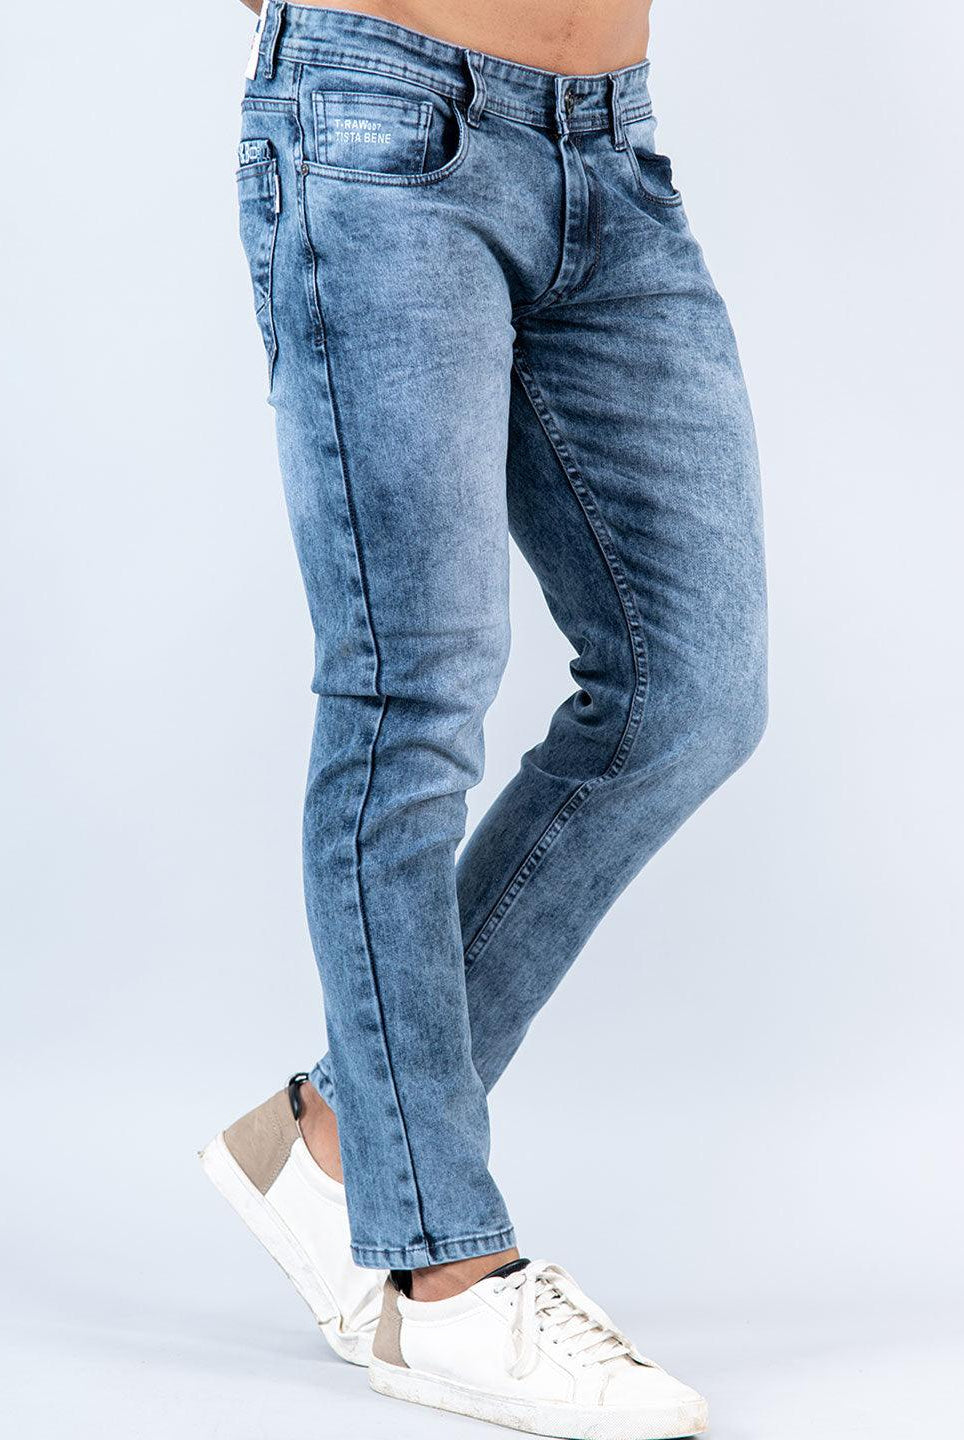 light denim jeans